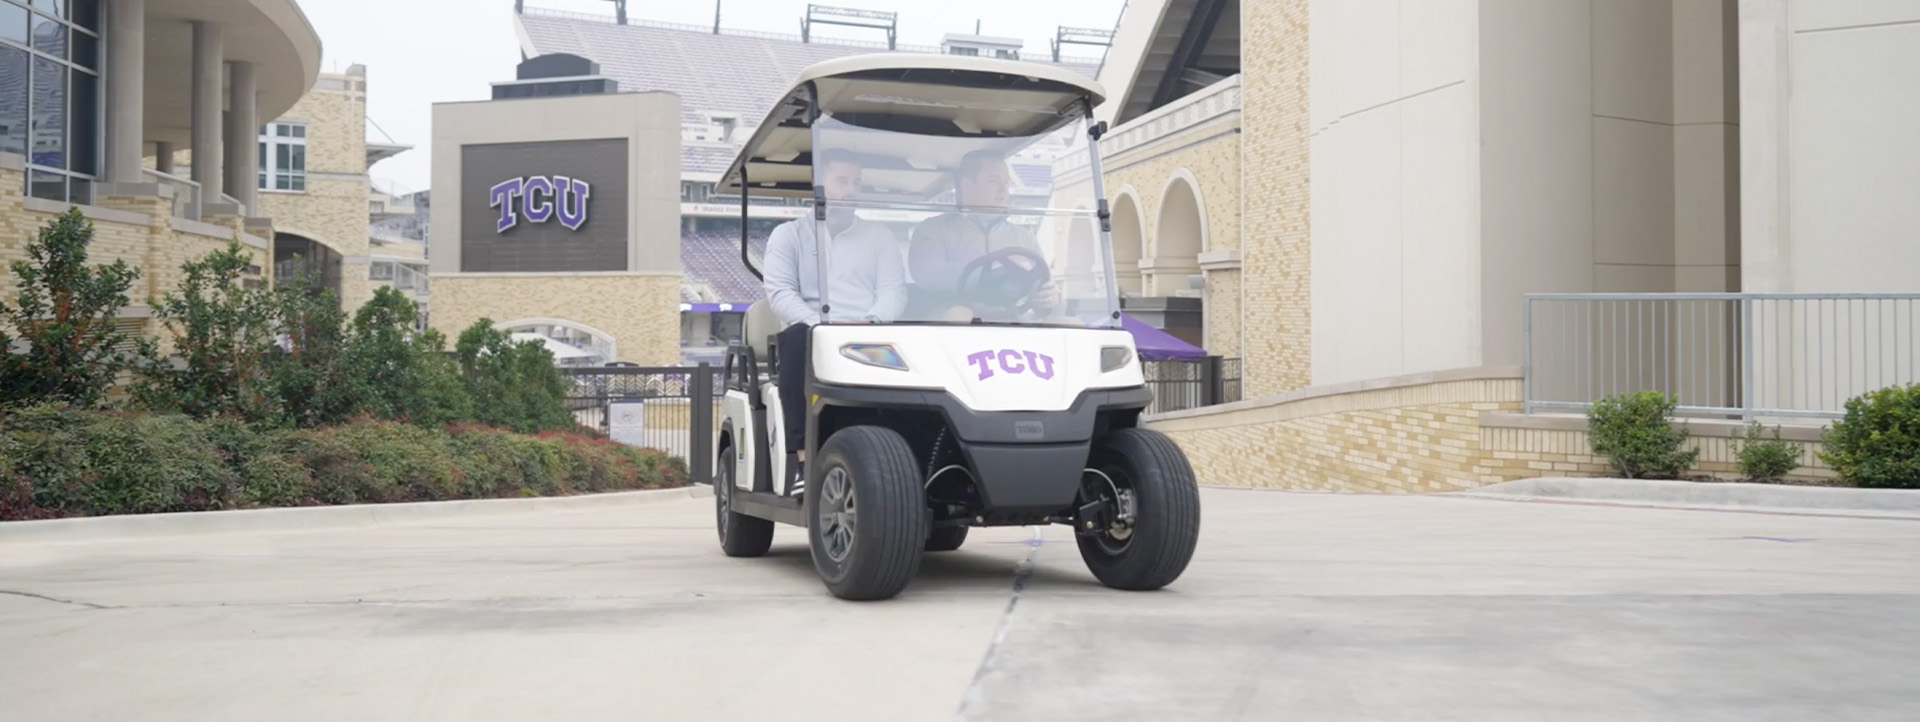 The Toro Visa Passenger Vehicle at TCU